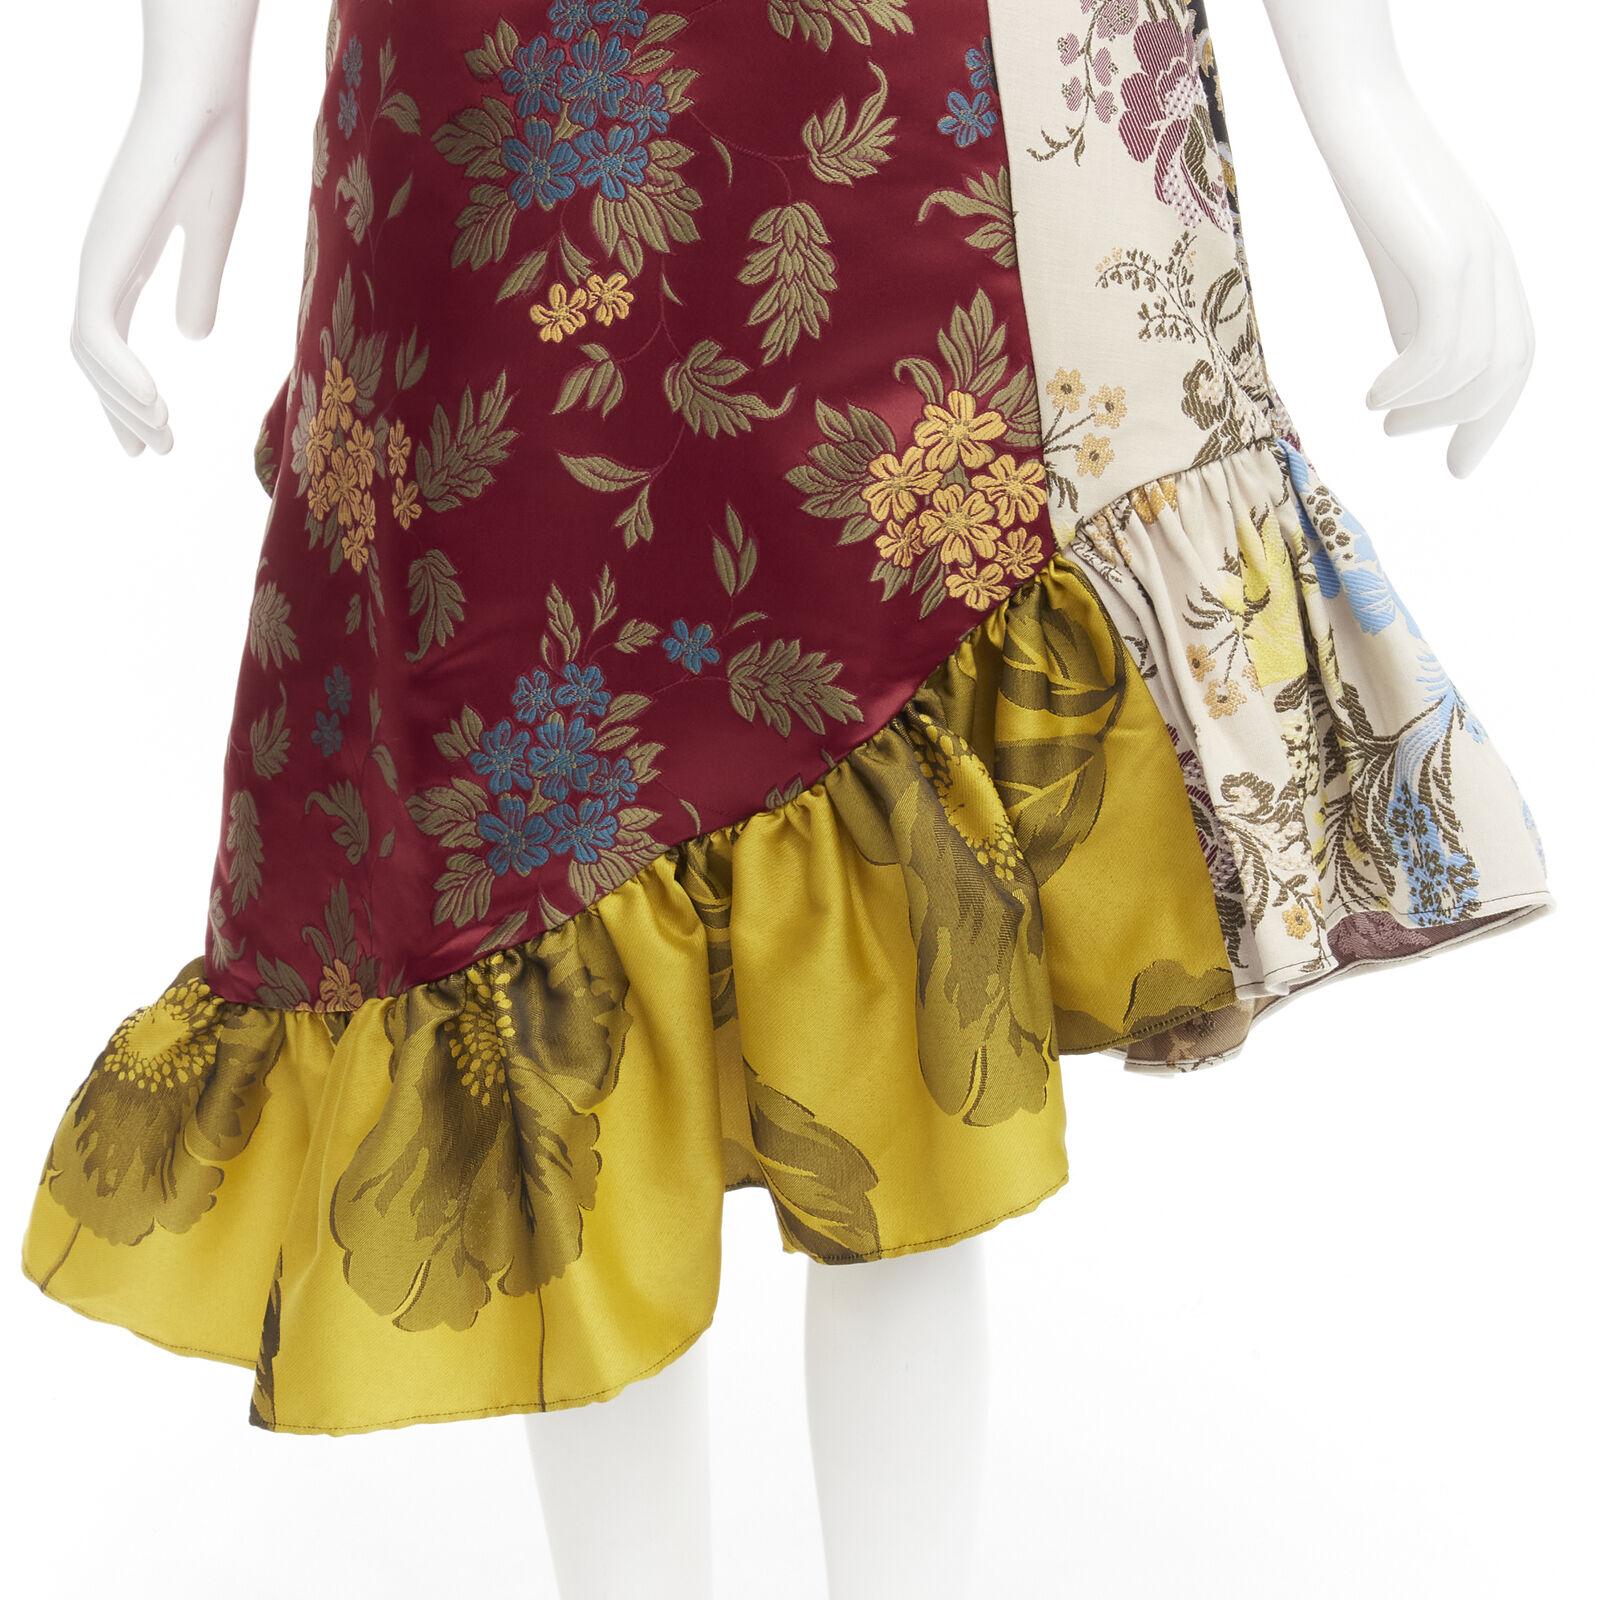 MARQUES ALMEIDA Net Sustain Remade 2020 patchwork brocade ruffled skirt UK6 XS 1